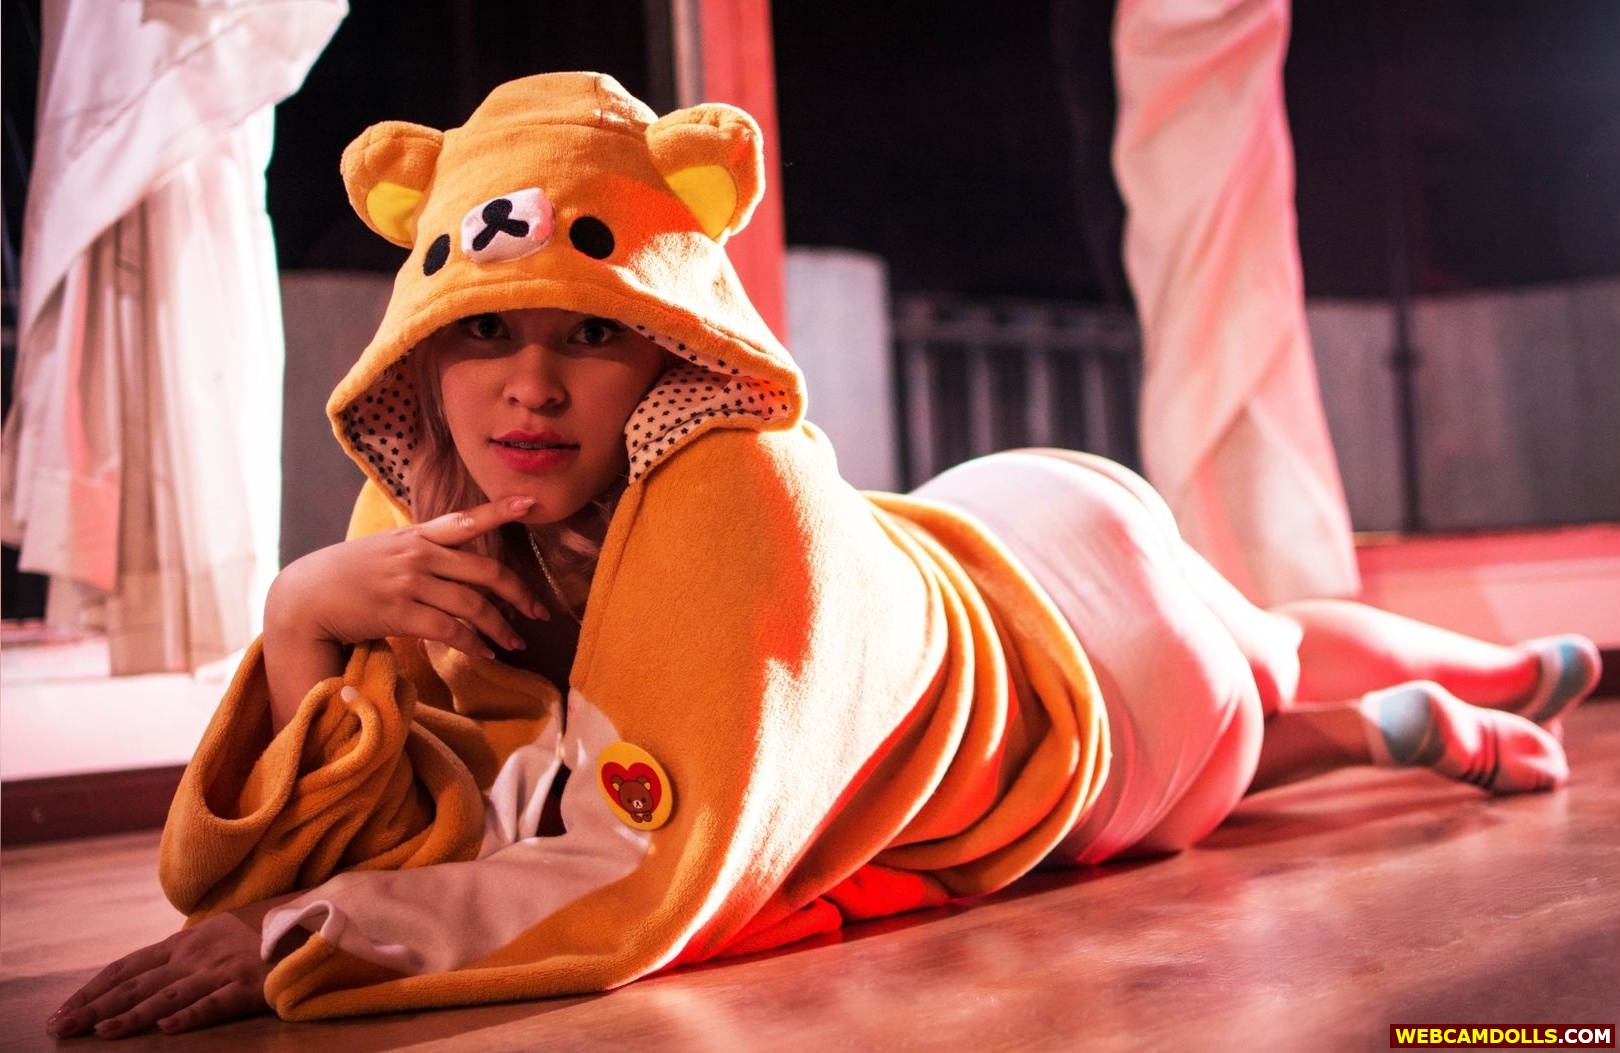 Blonde Girl with Bare Legs in Teddy Bear Costume on Webcamdolls